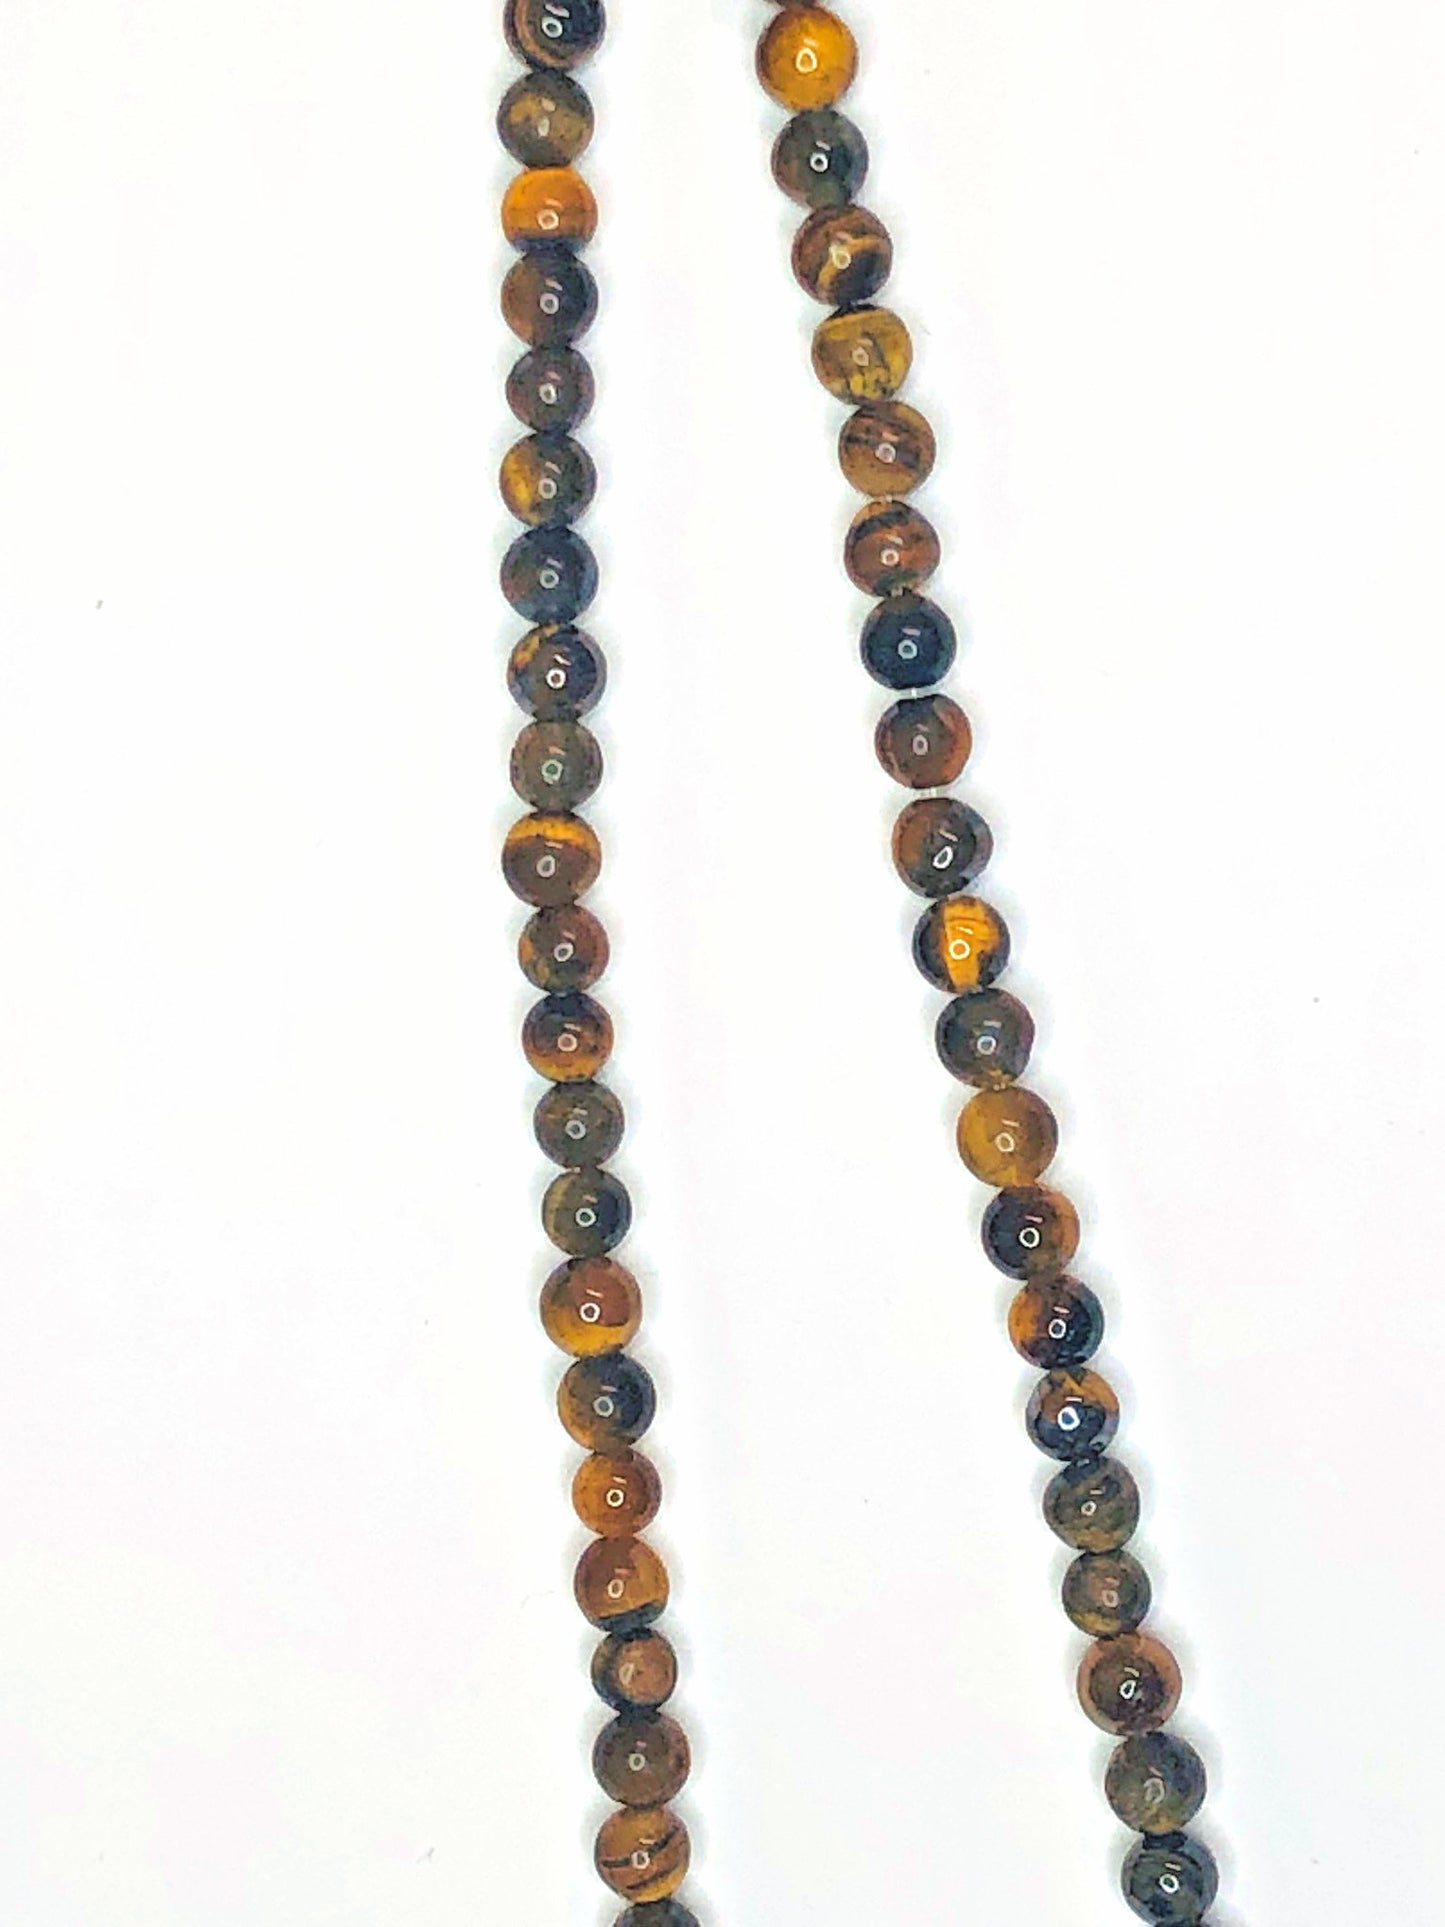 Bead Gallery Tiger's Eye Semi-Precious Smooth Stone Round Beads, 4 mm - 60 Beads